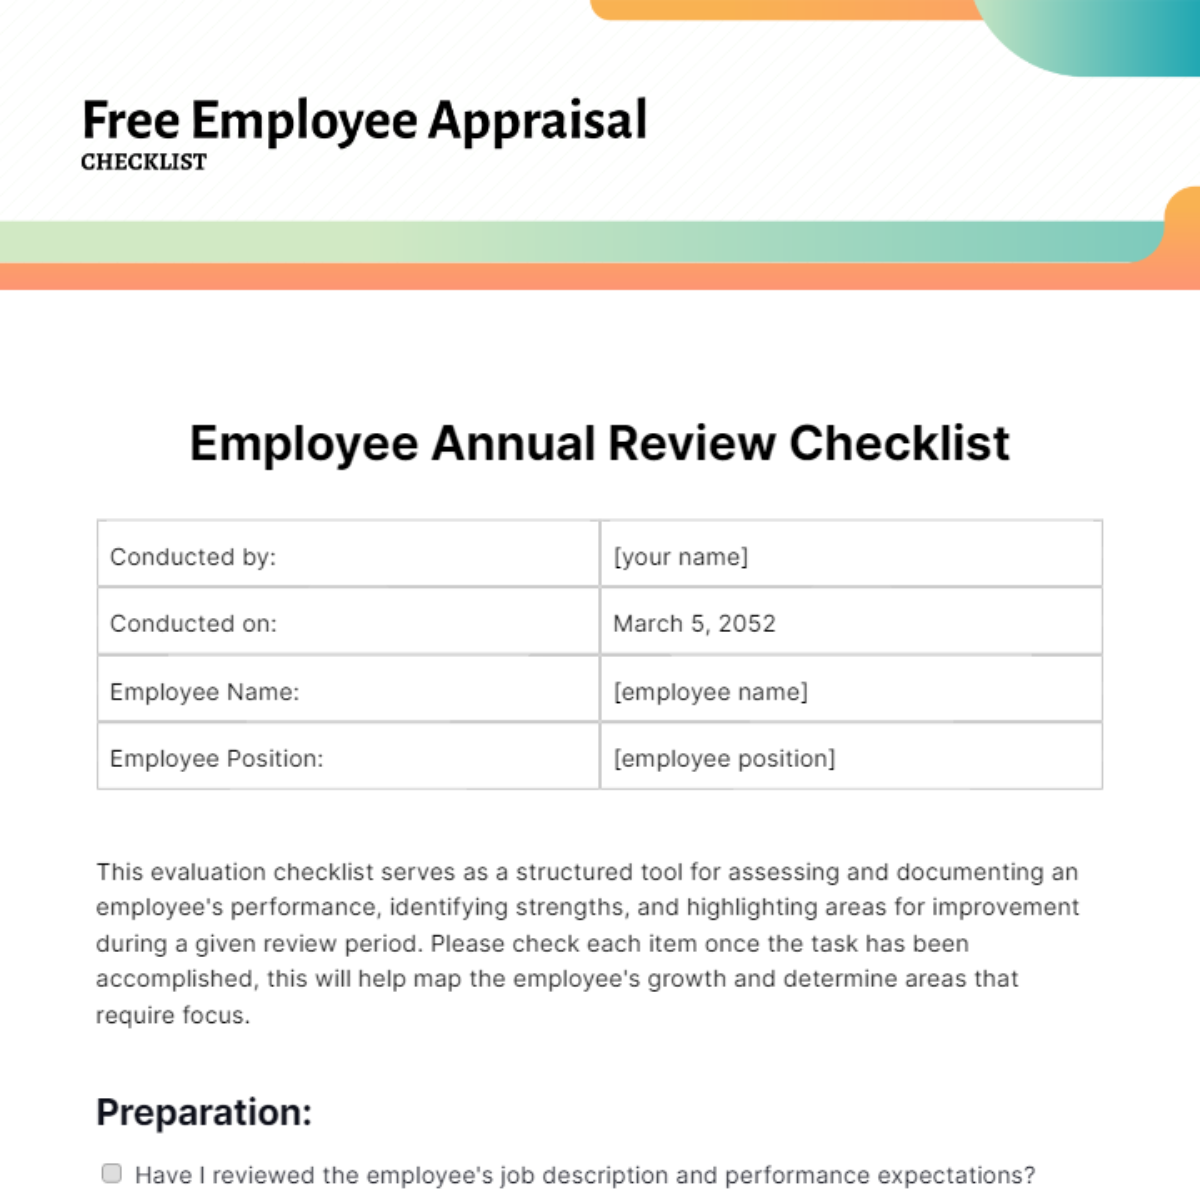 Free Employee Appraisal Checklist Template